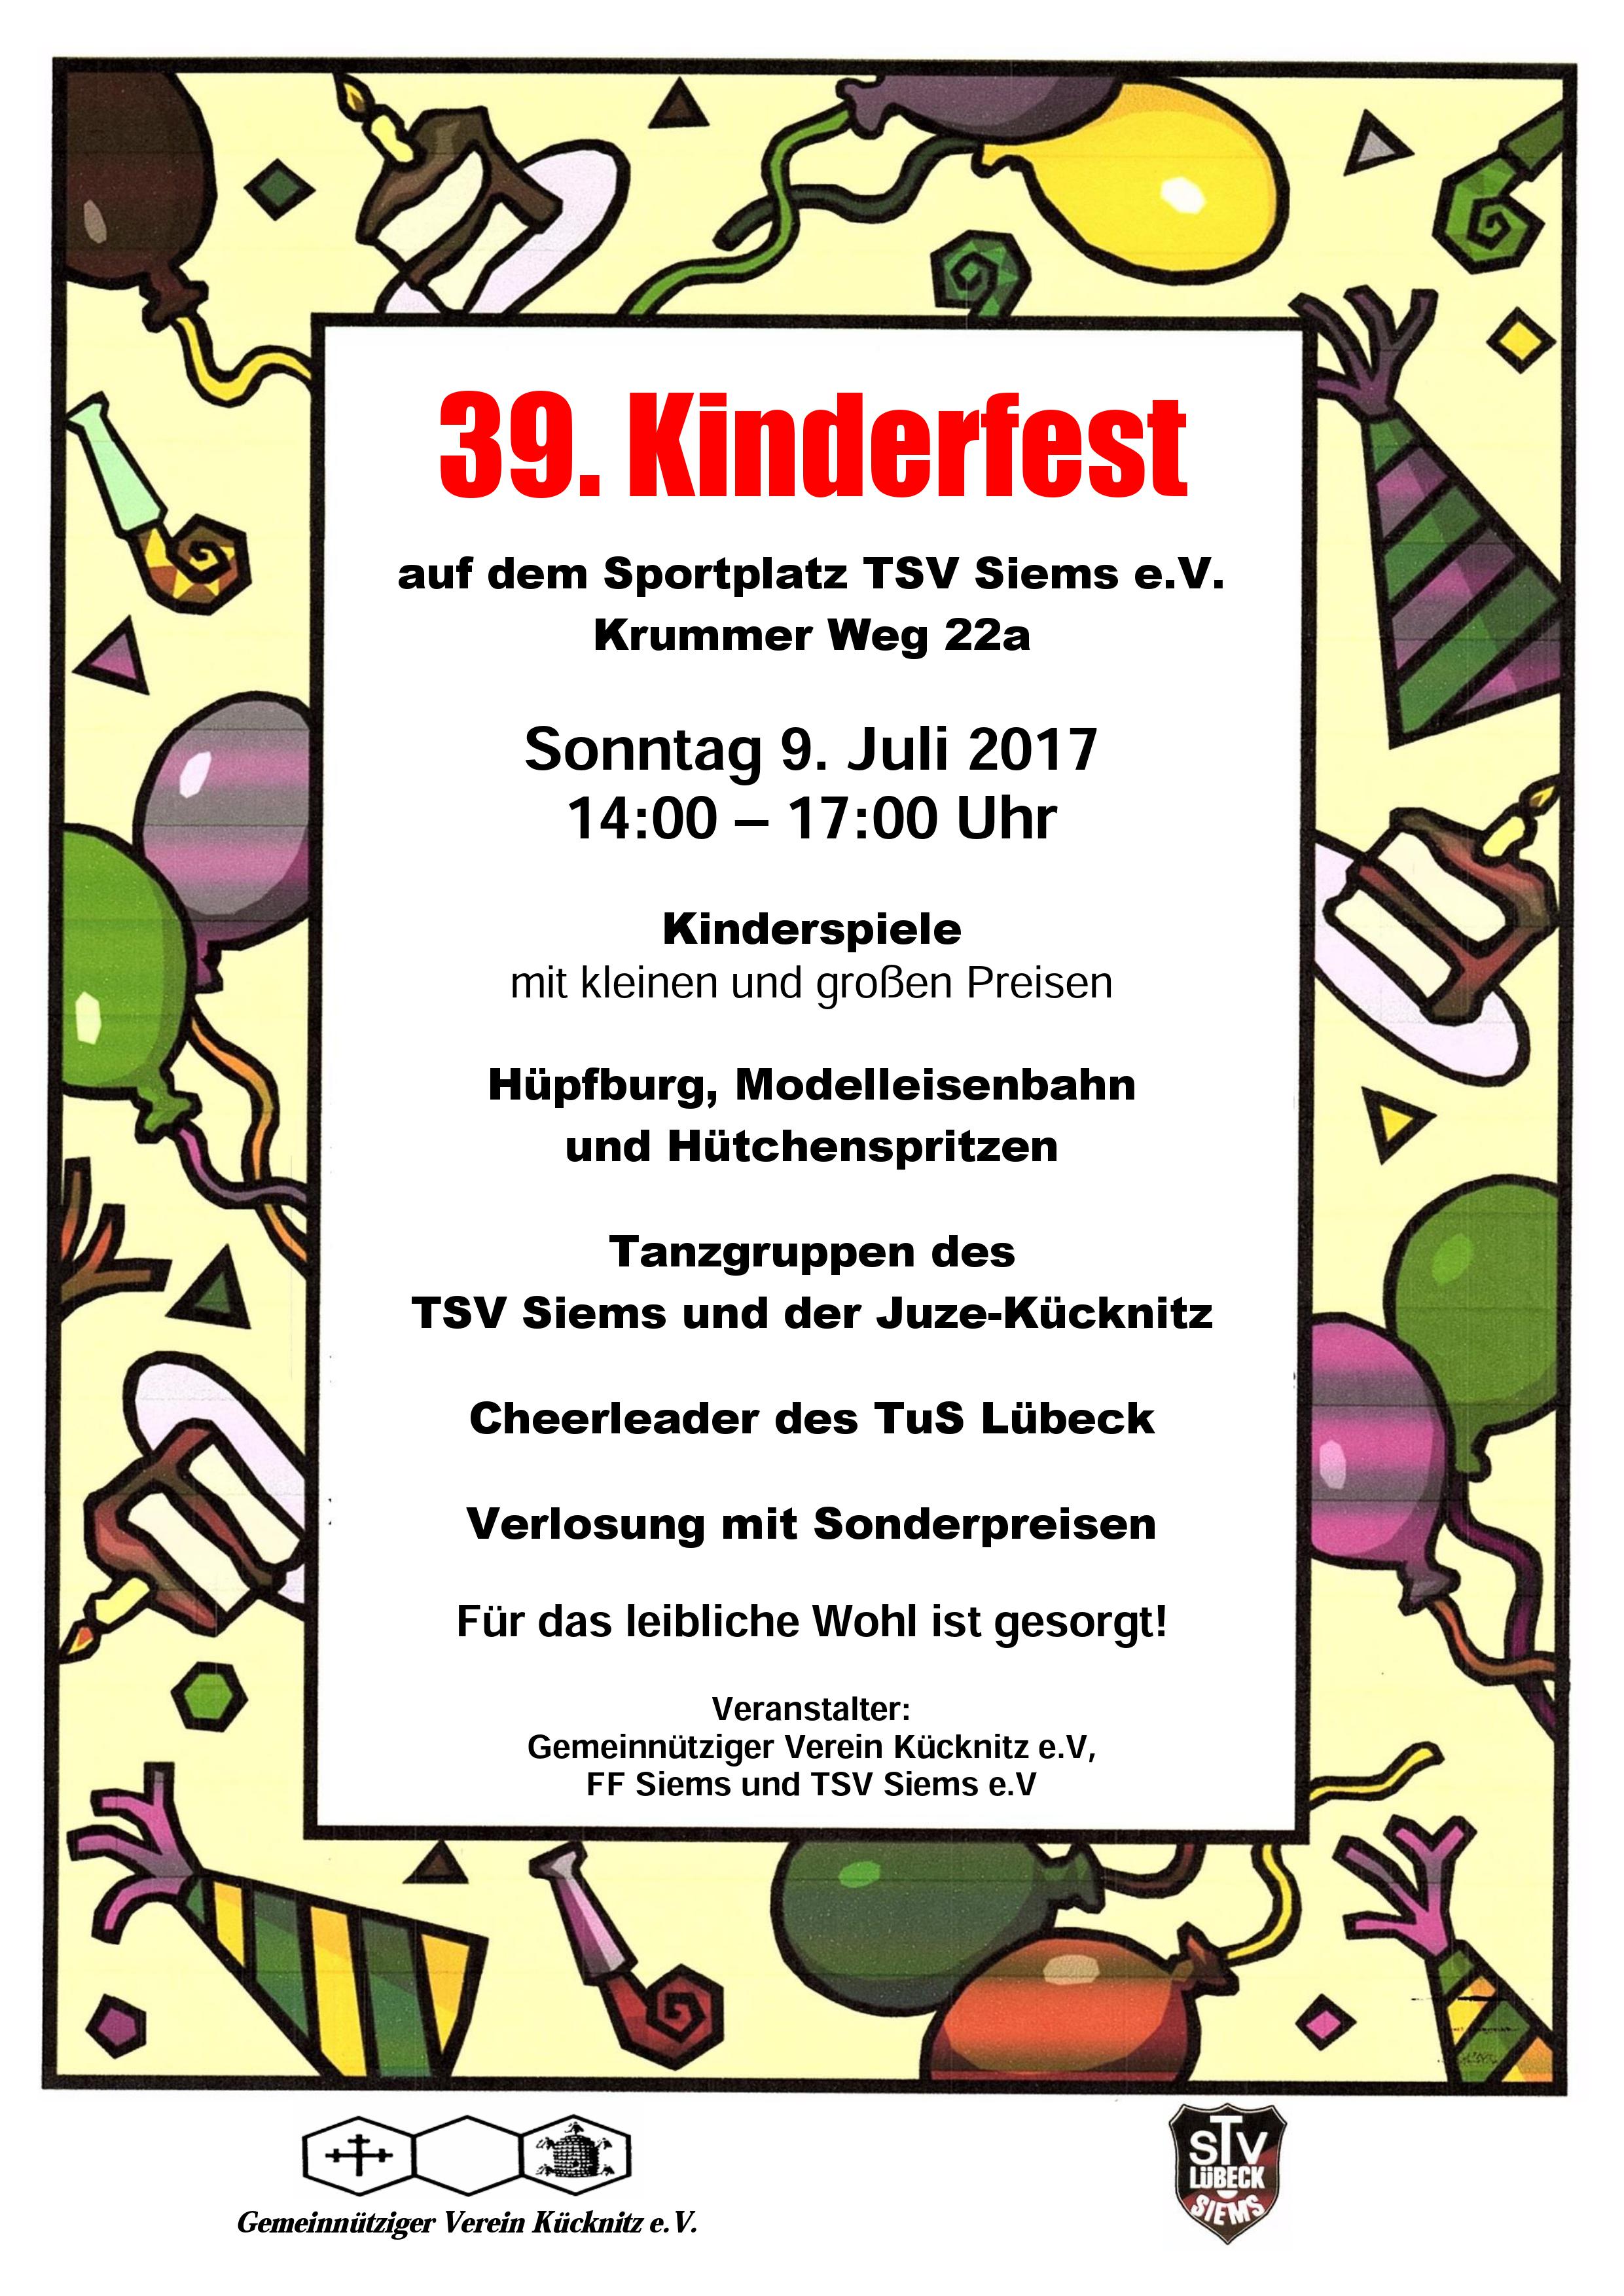 2017 Kinderfest GMVK